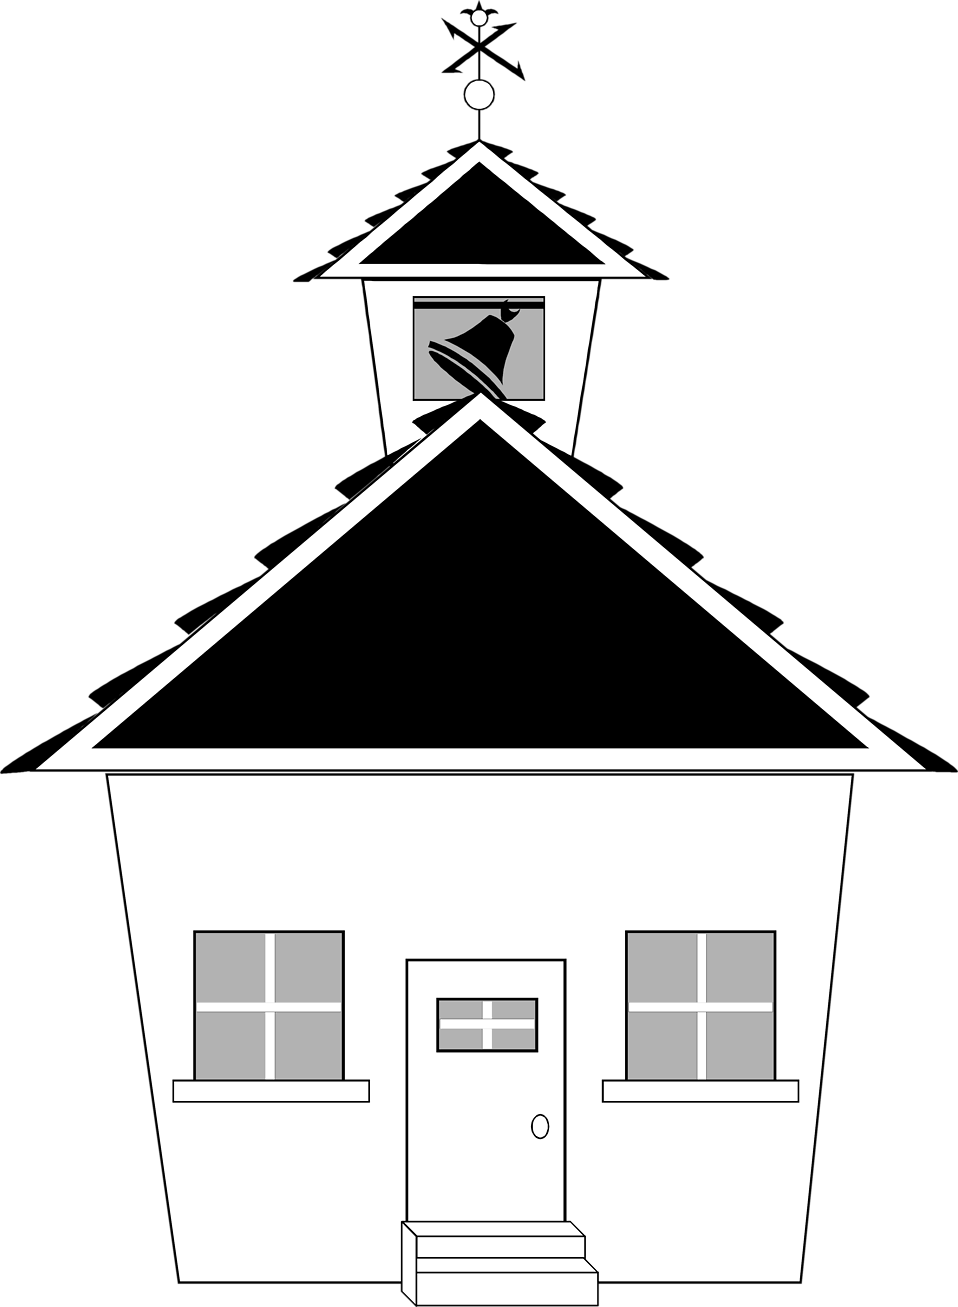 clip art school building. Illustration of a small school